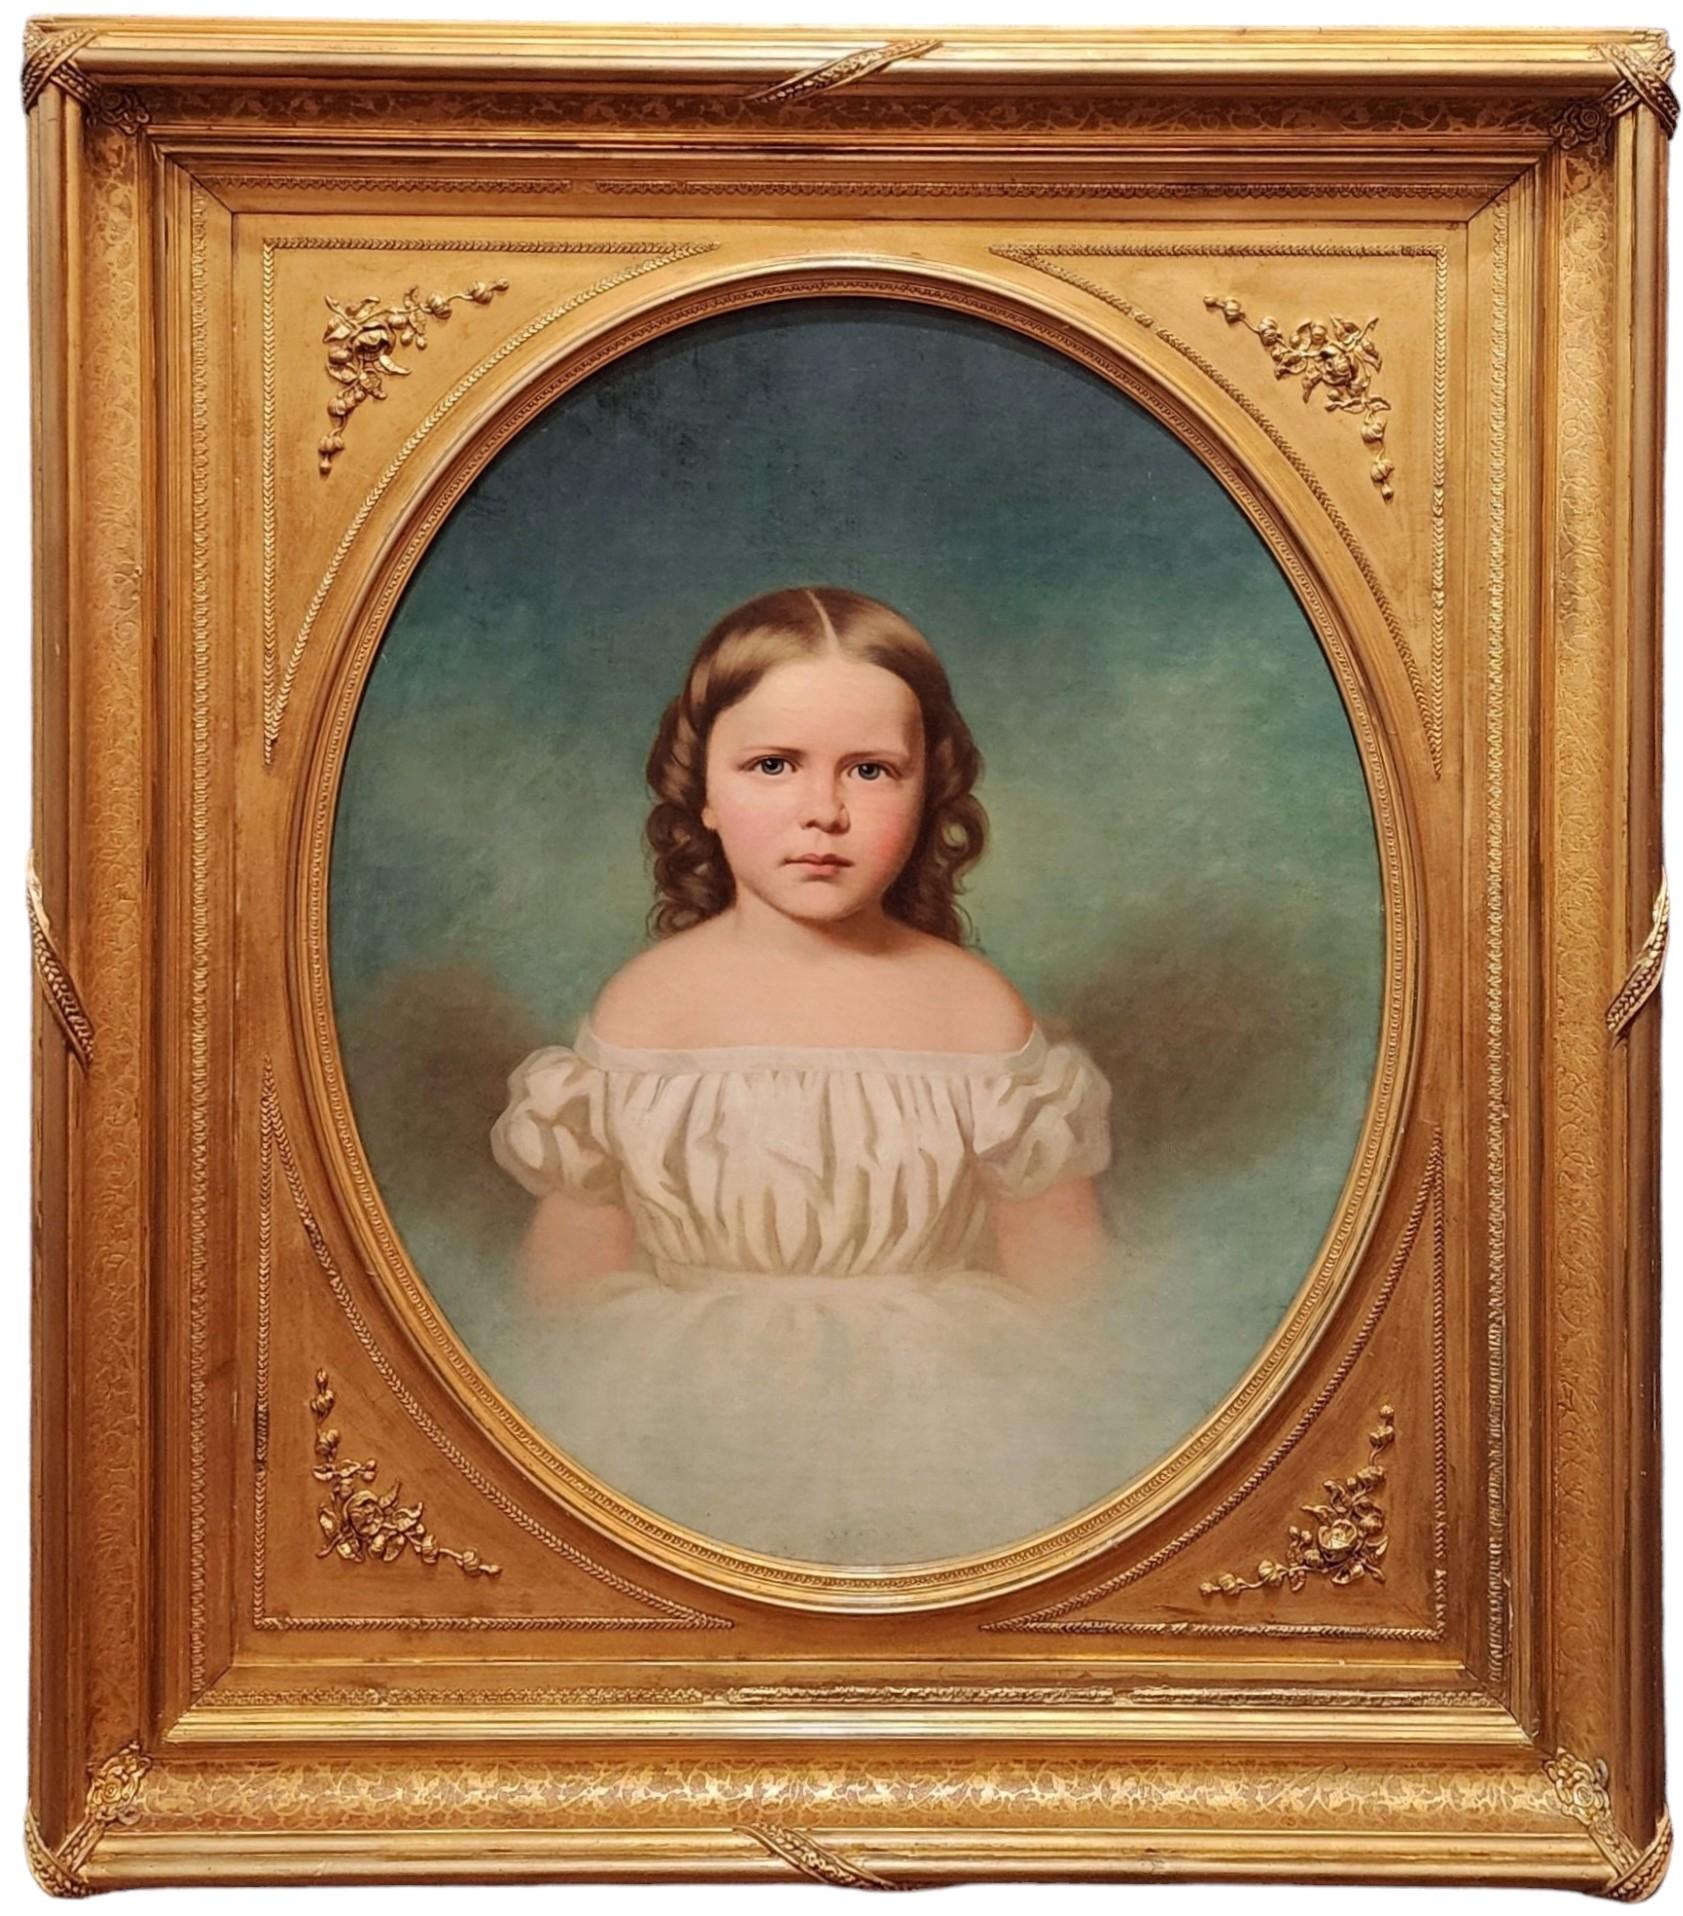 Unknown Portrait Painting - Portrait of a Girl, American Portraiture, Blue Eyes, White Dress, Excellent 